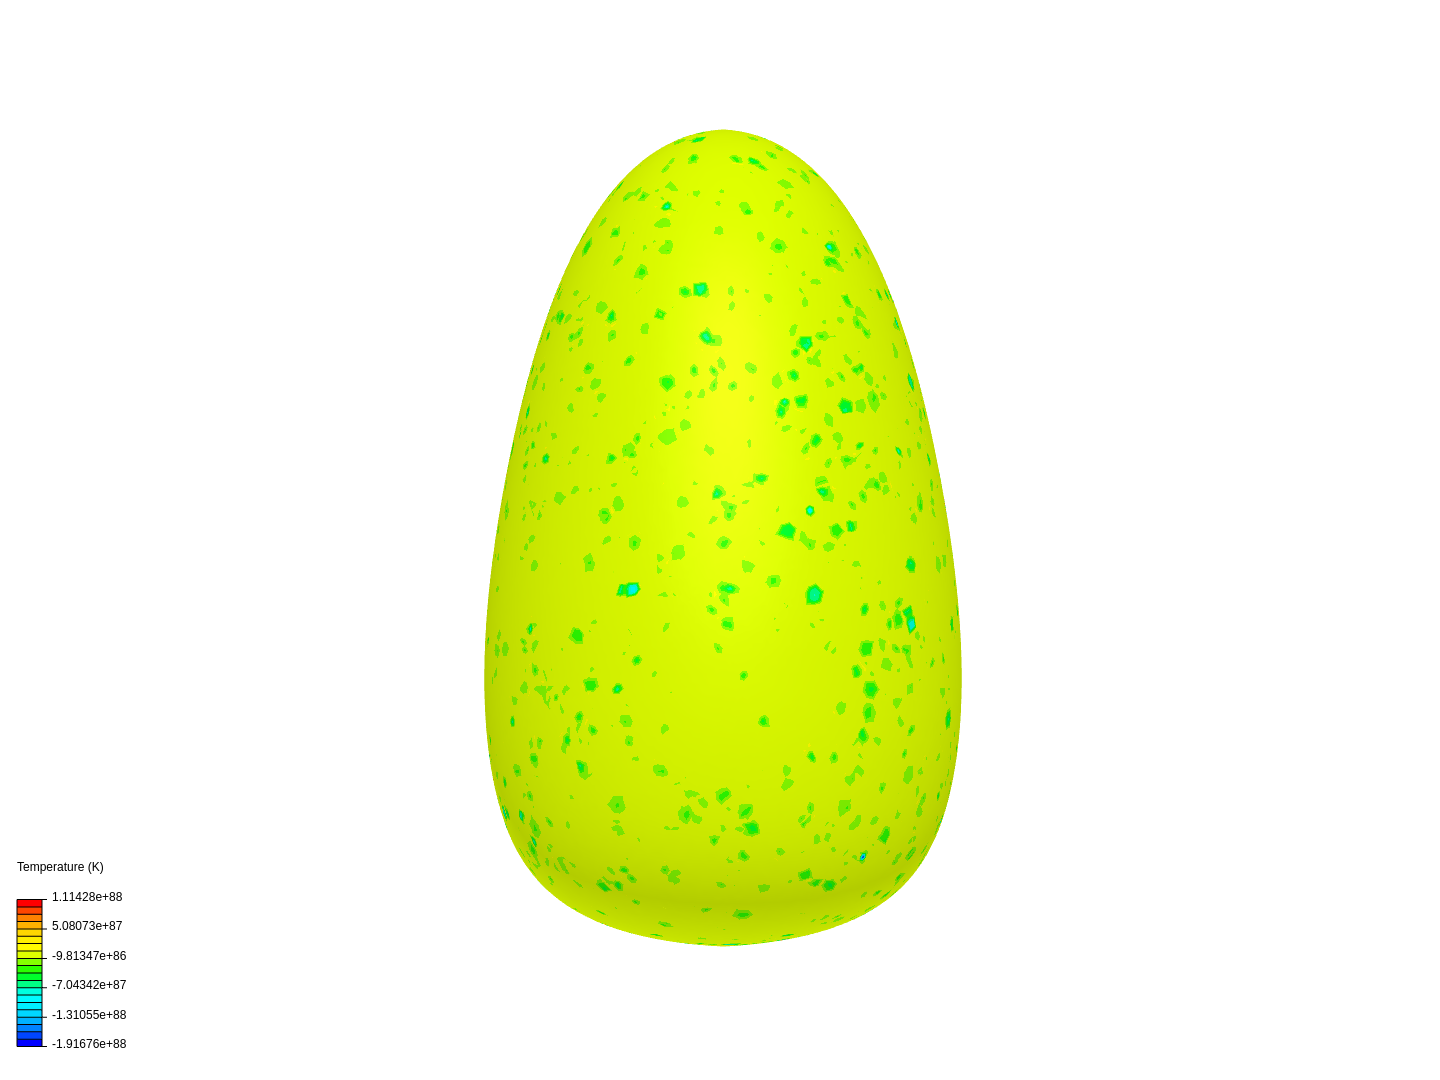 egg_sim image